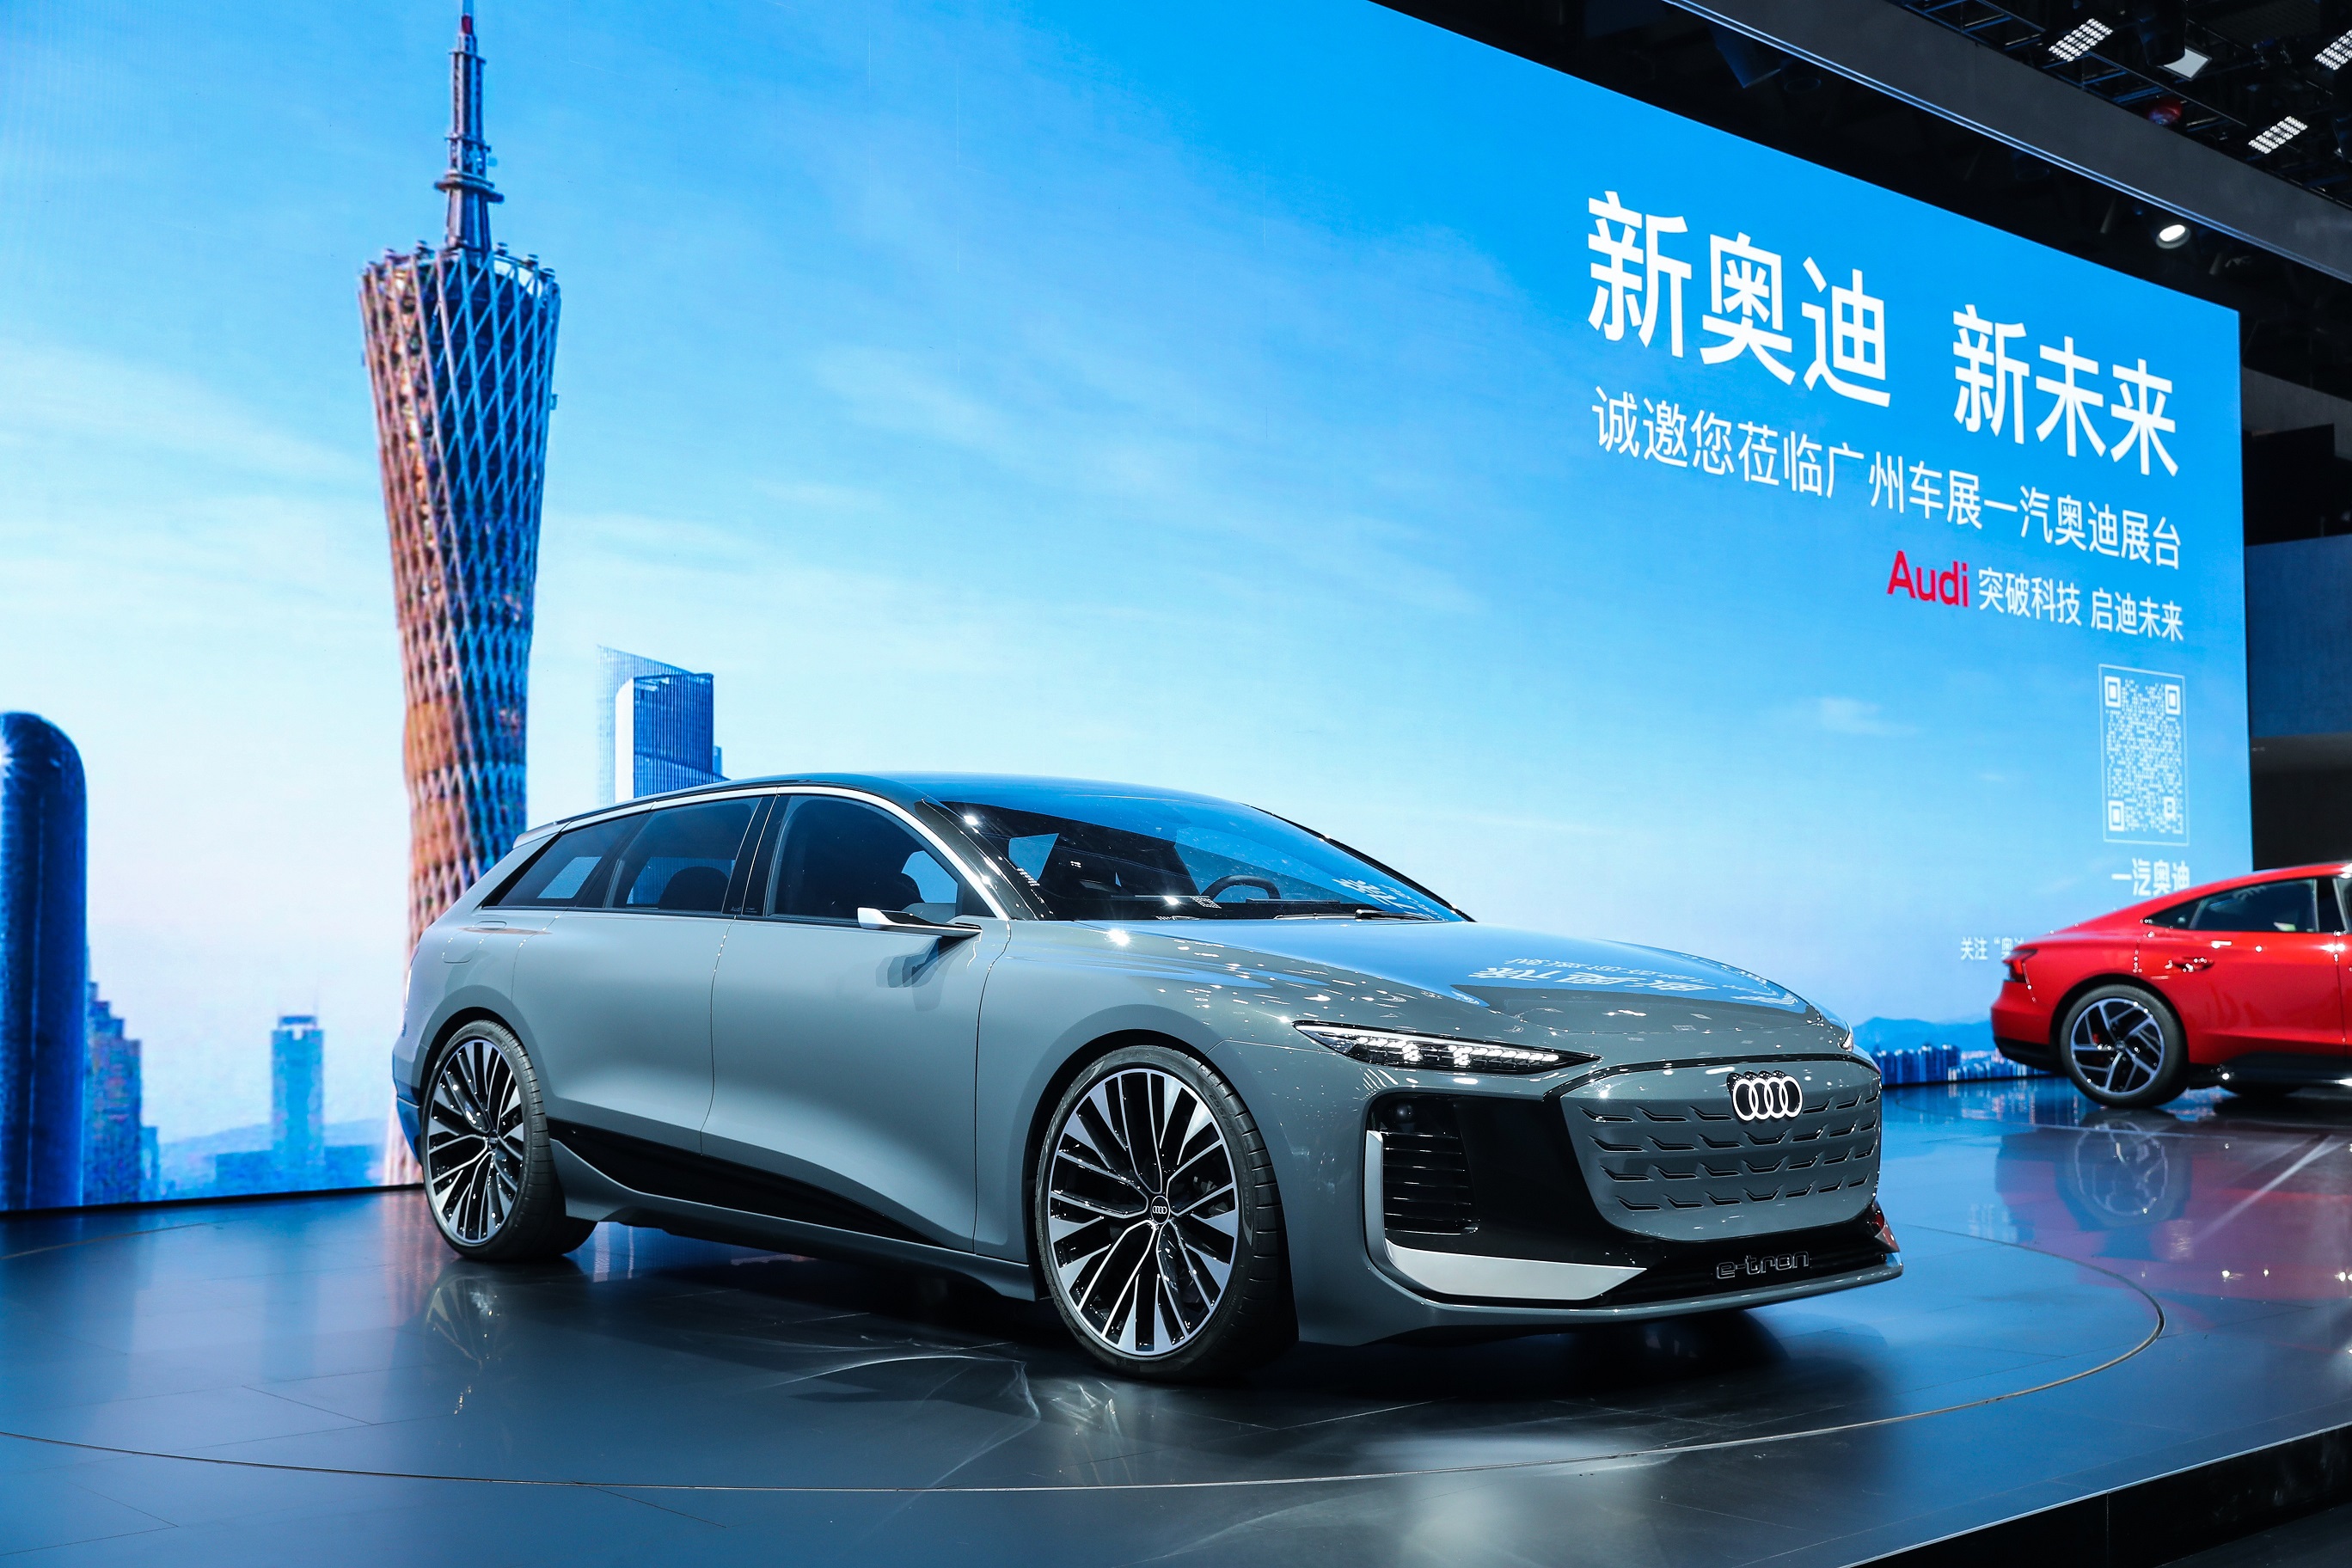 Auto Guangzhou 2022 Exhibition Marketing Pico 2